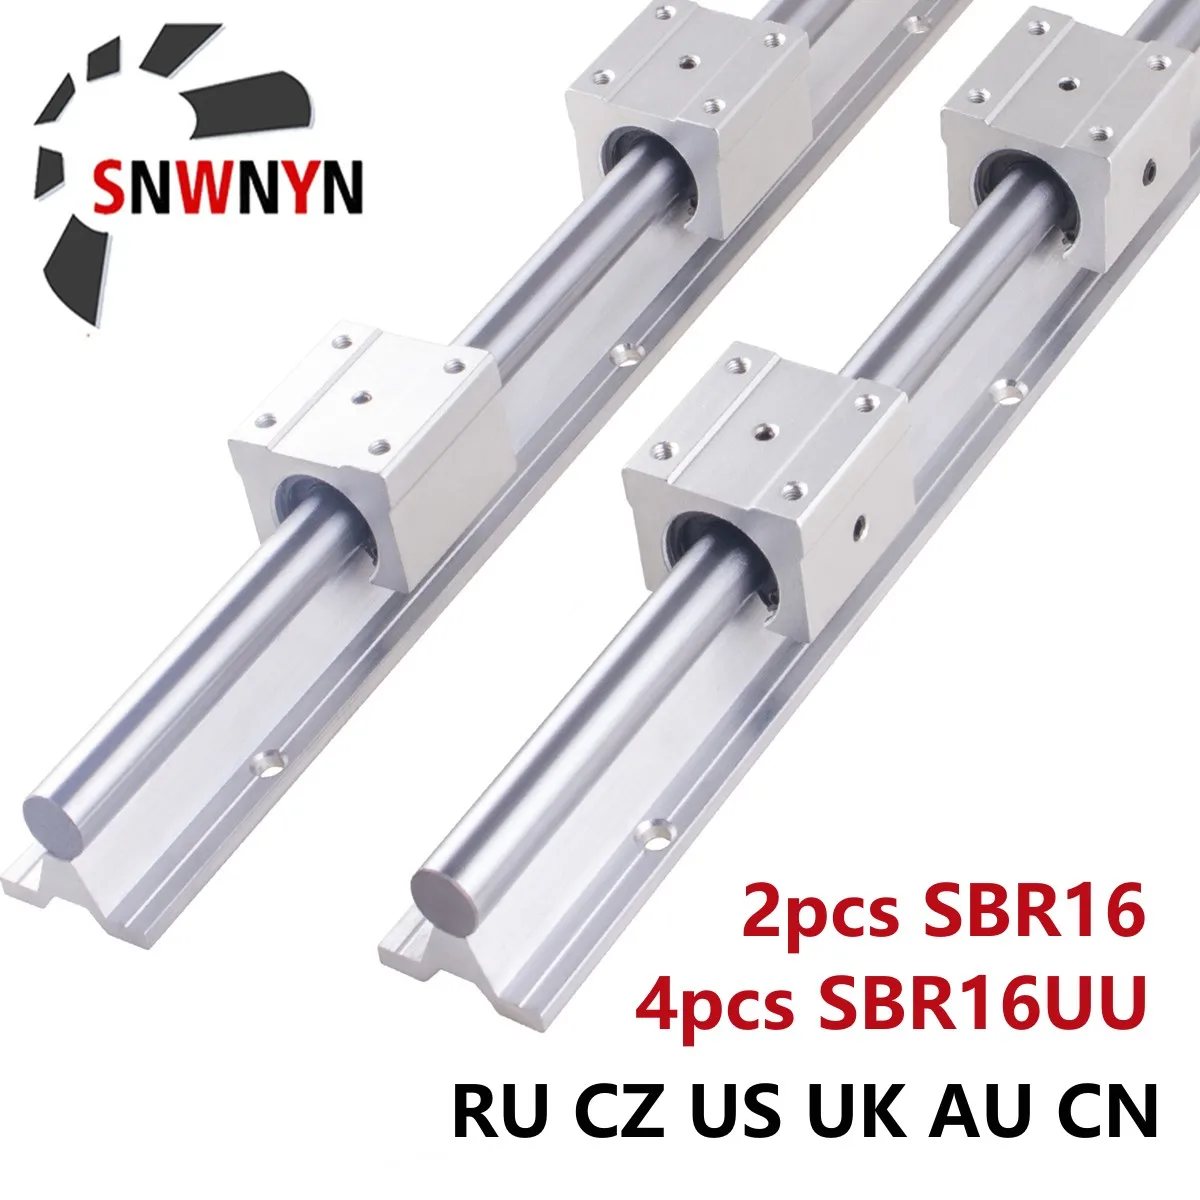 2pcs SBR16 Linear Rail Guide D16 300 400 500 600 1000 1200 1500mm Fully Slide Support +4pcs SBR16UU Linear Bearing Block For CNC